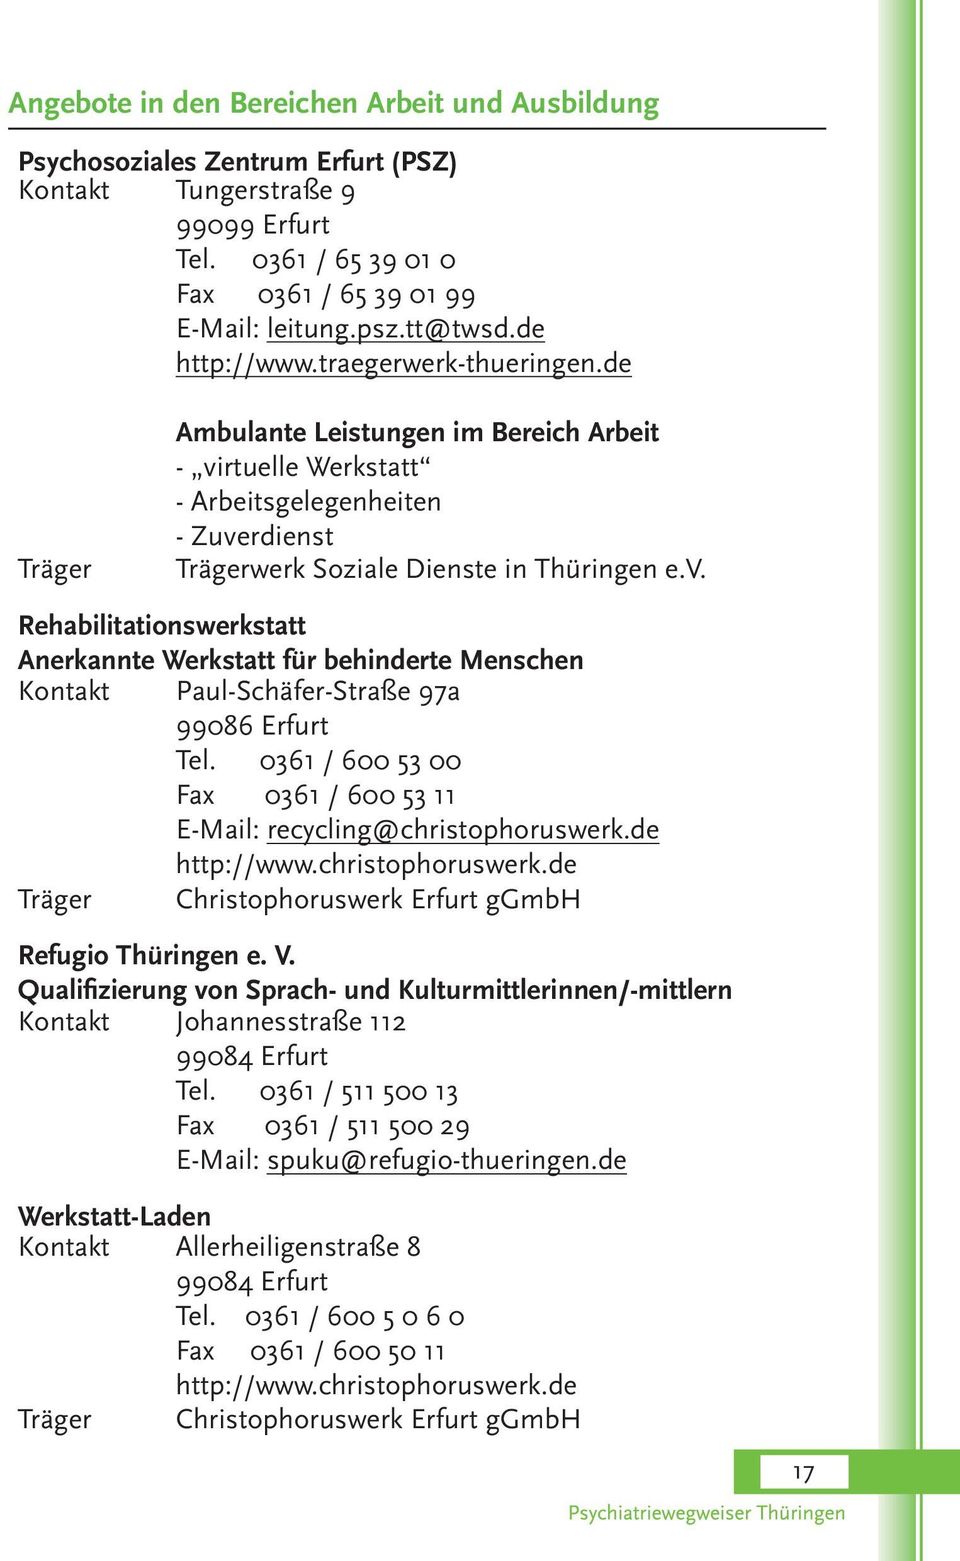 06 /600 5 00 Fax 0361 /600 53 11 E-Mail: recycling@christophoruswerk.de http://www.christophoruswerk.de Träger Christophoruswerk Erfurt ggmbh Refugio Thüringen e. V.